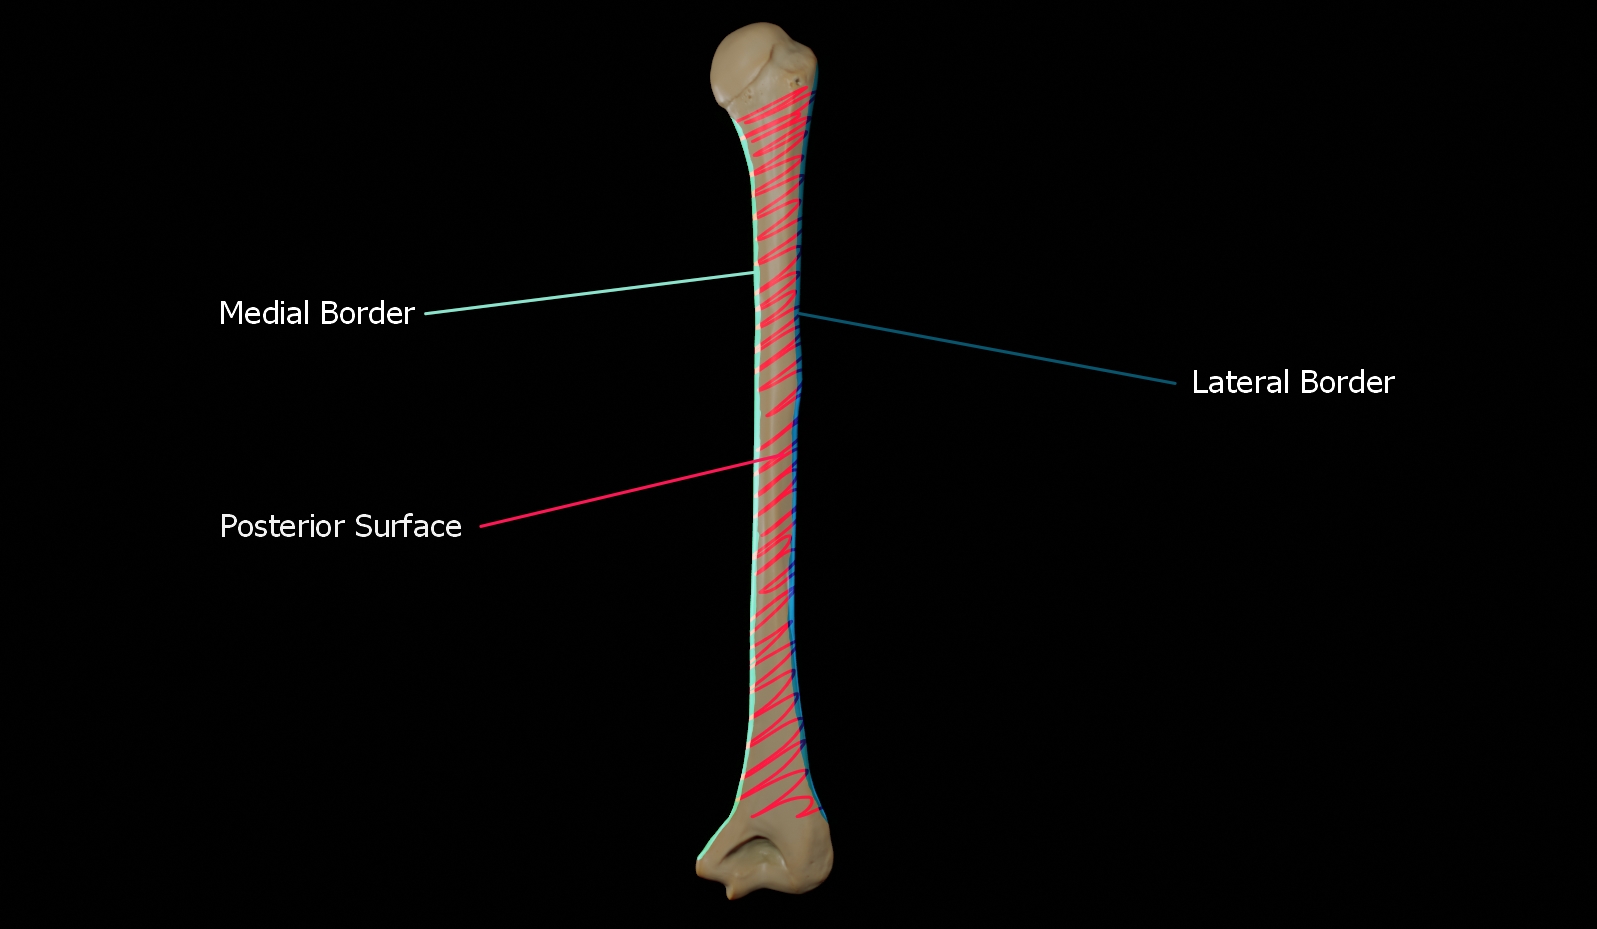 Humerus Bony Anatomy - Anterior and Posterior Views By